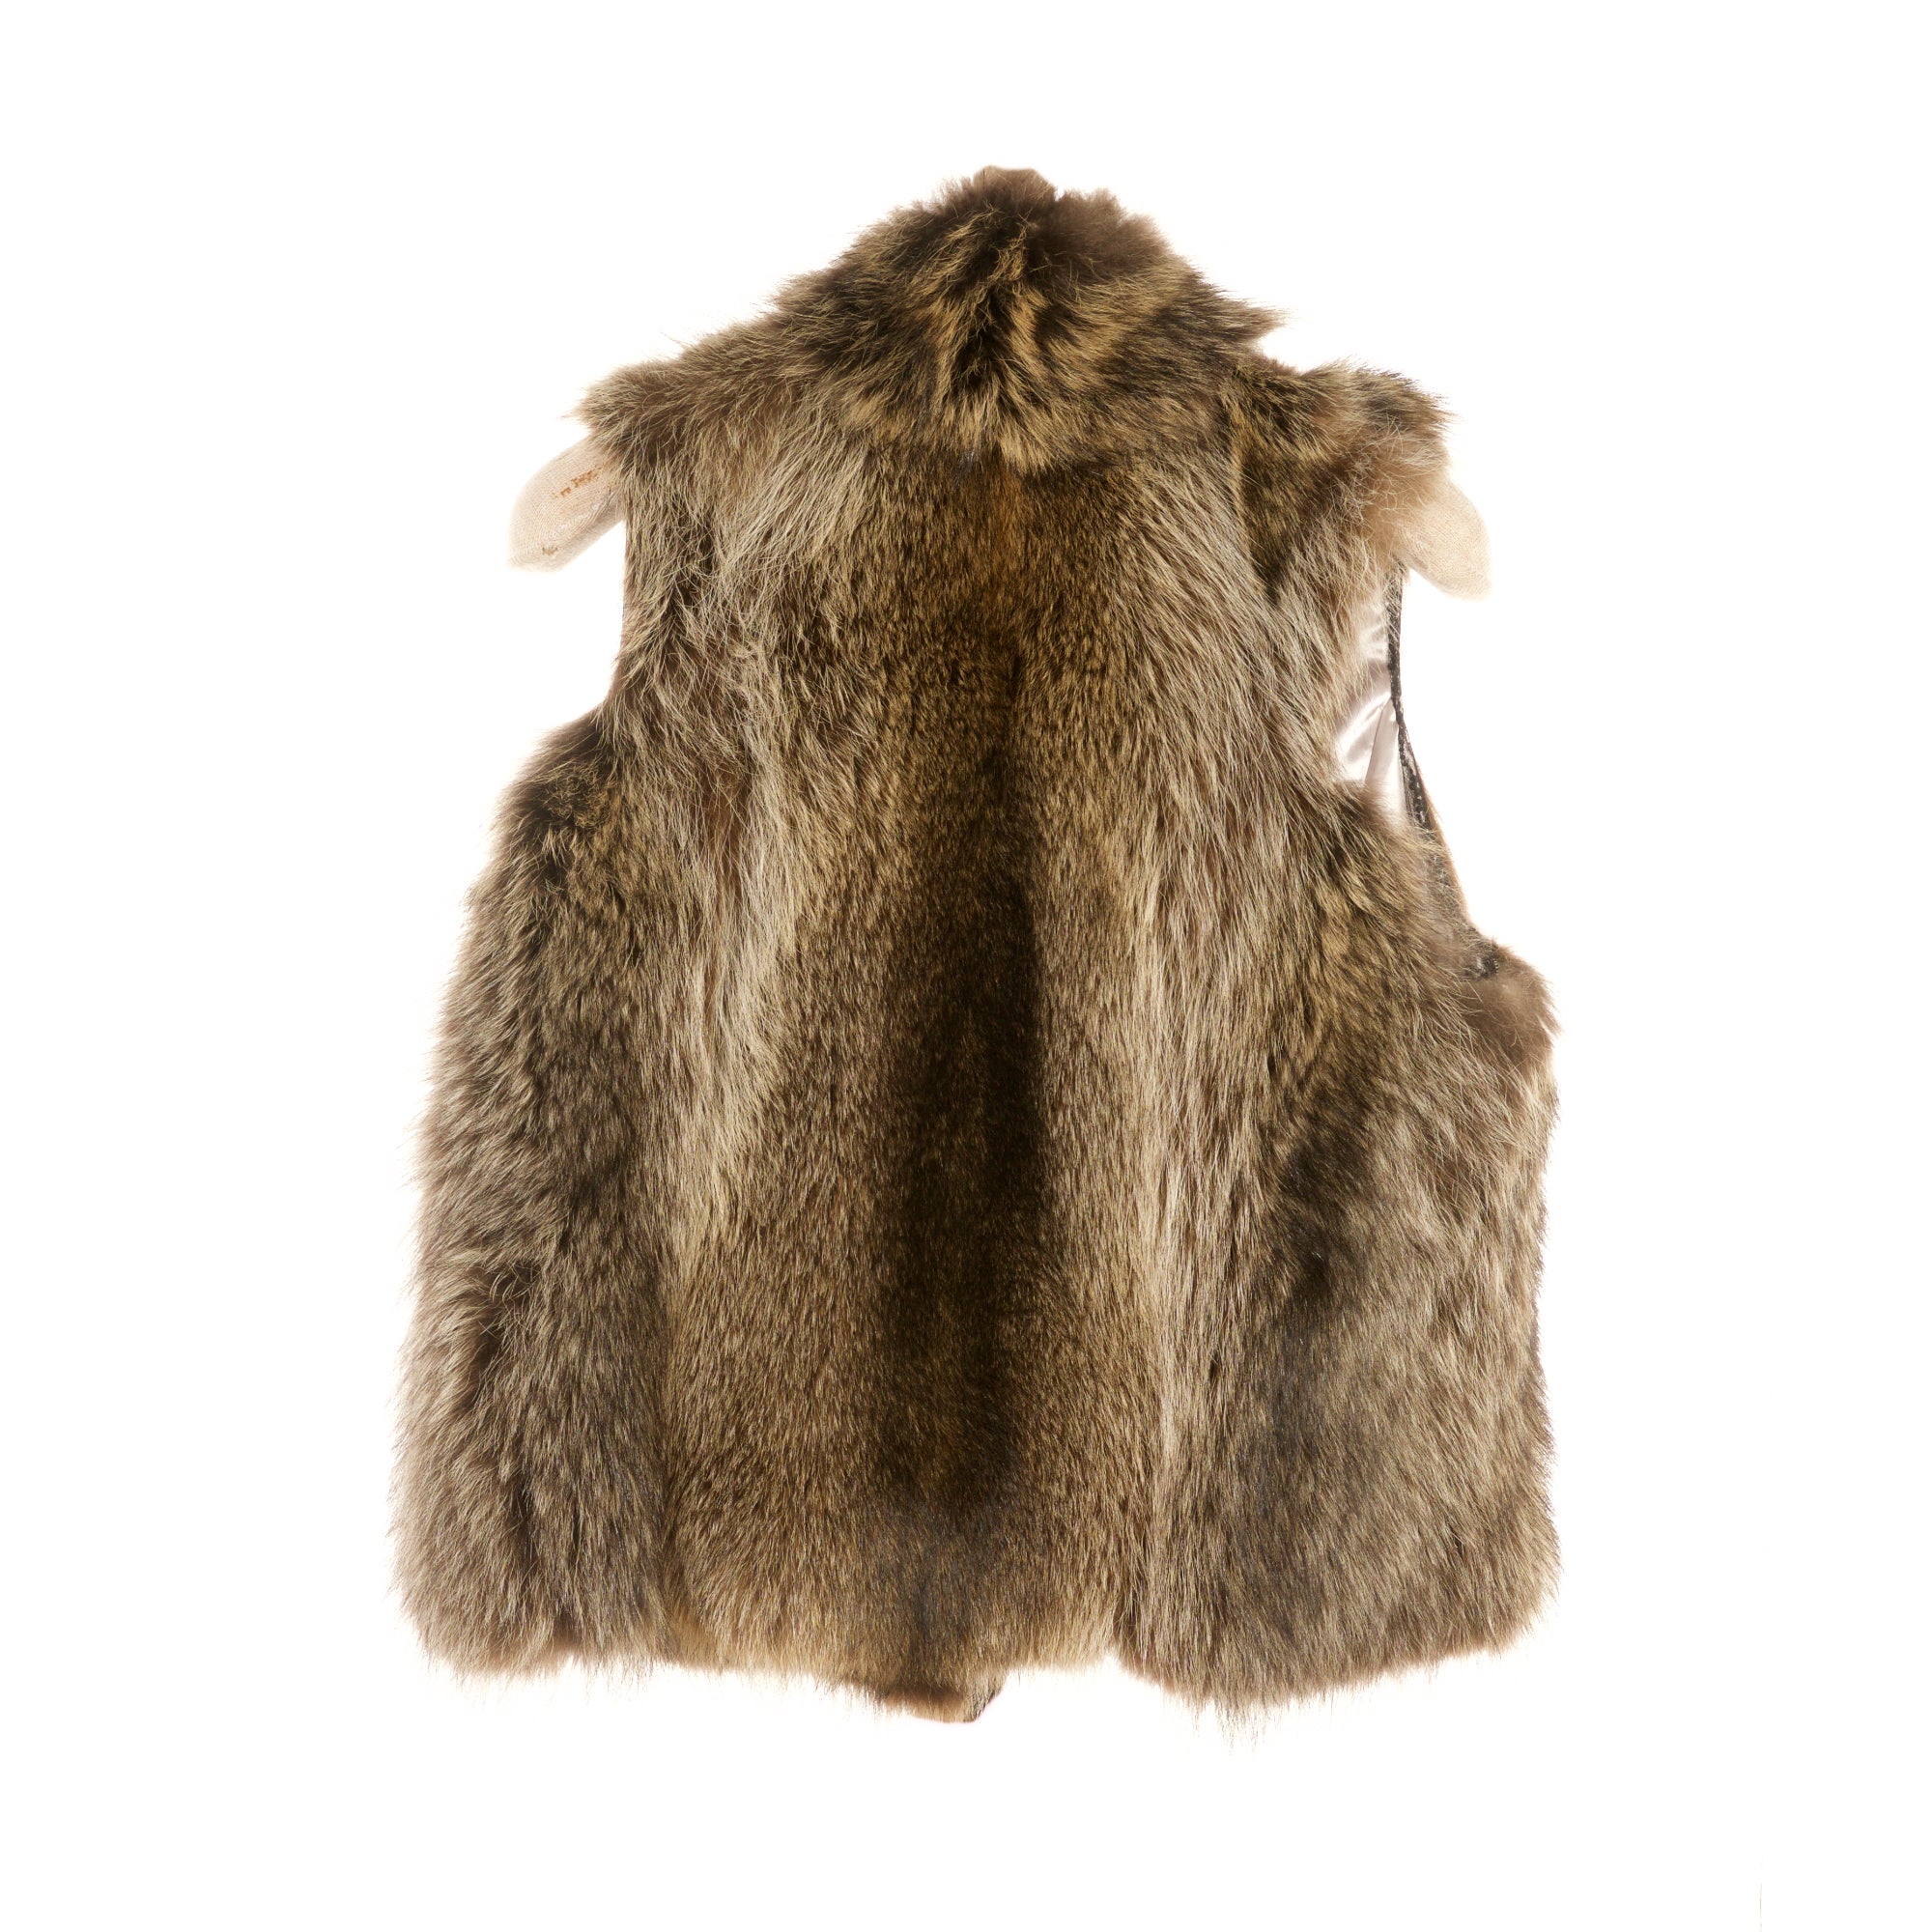 SALE SALE - Vinson Furs - Raccoon Vests - Ladies